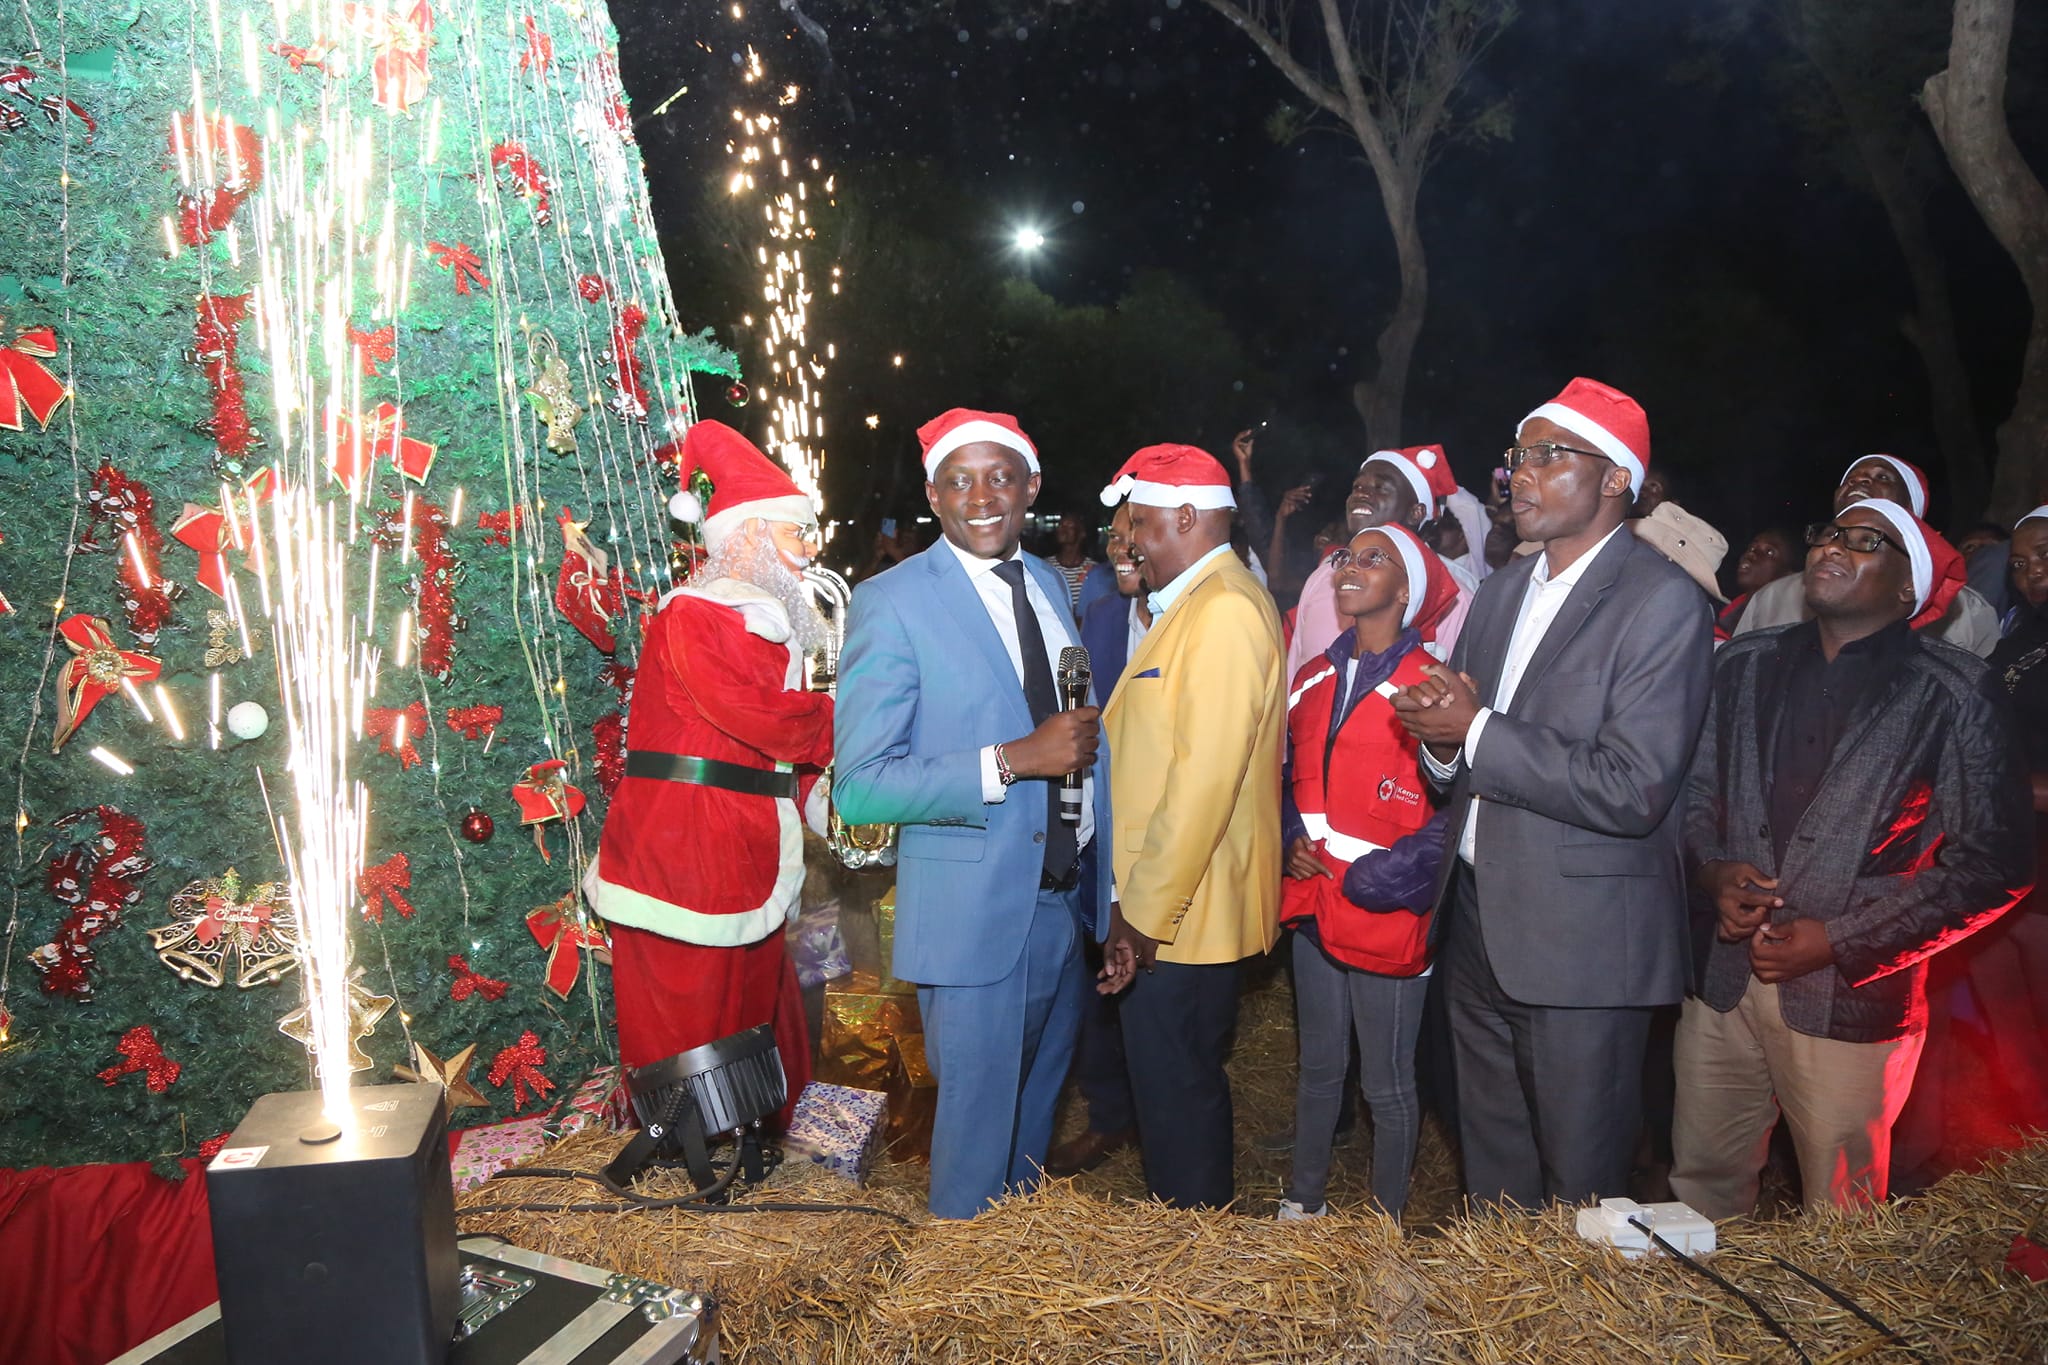 Deputy Governor David Kones Illuminates Nyayo Gardens with Festive Cheer